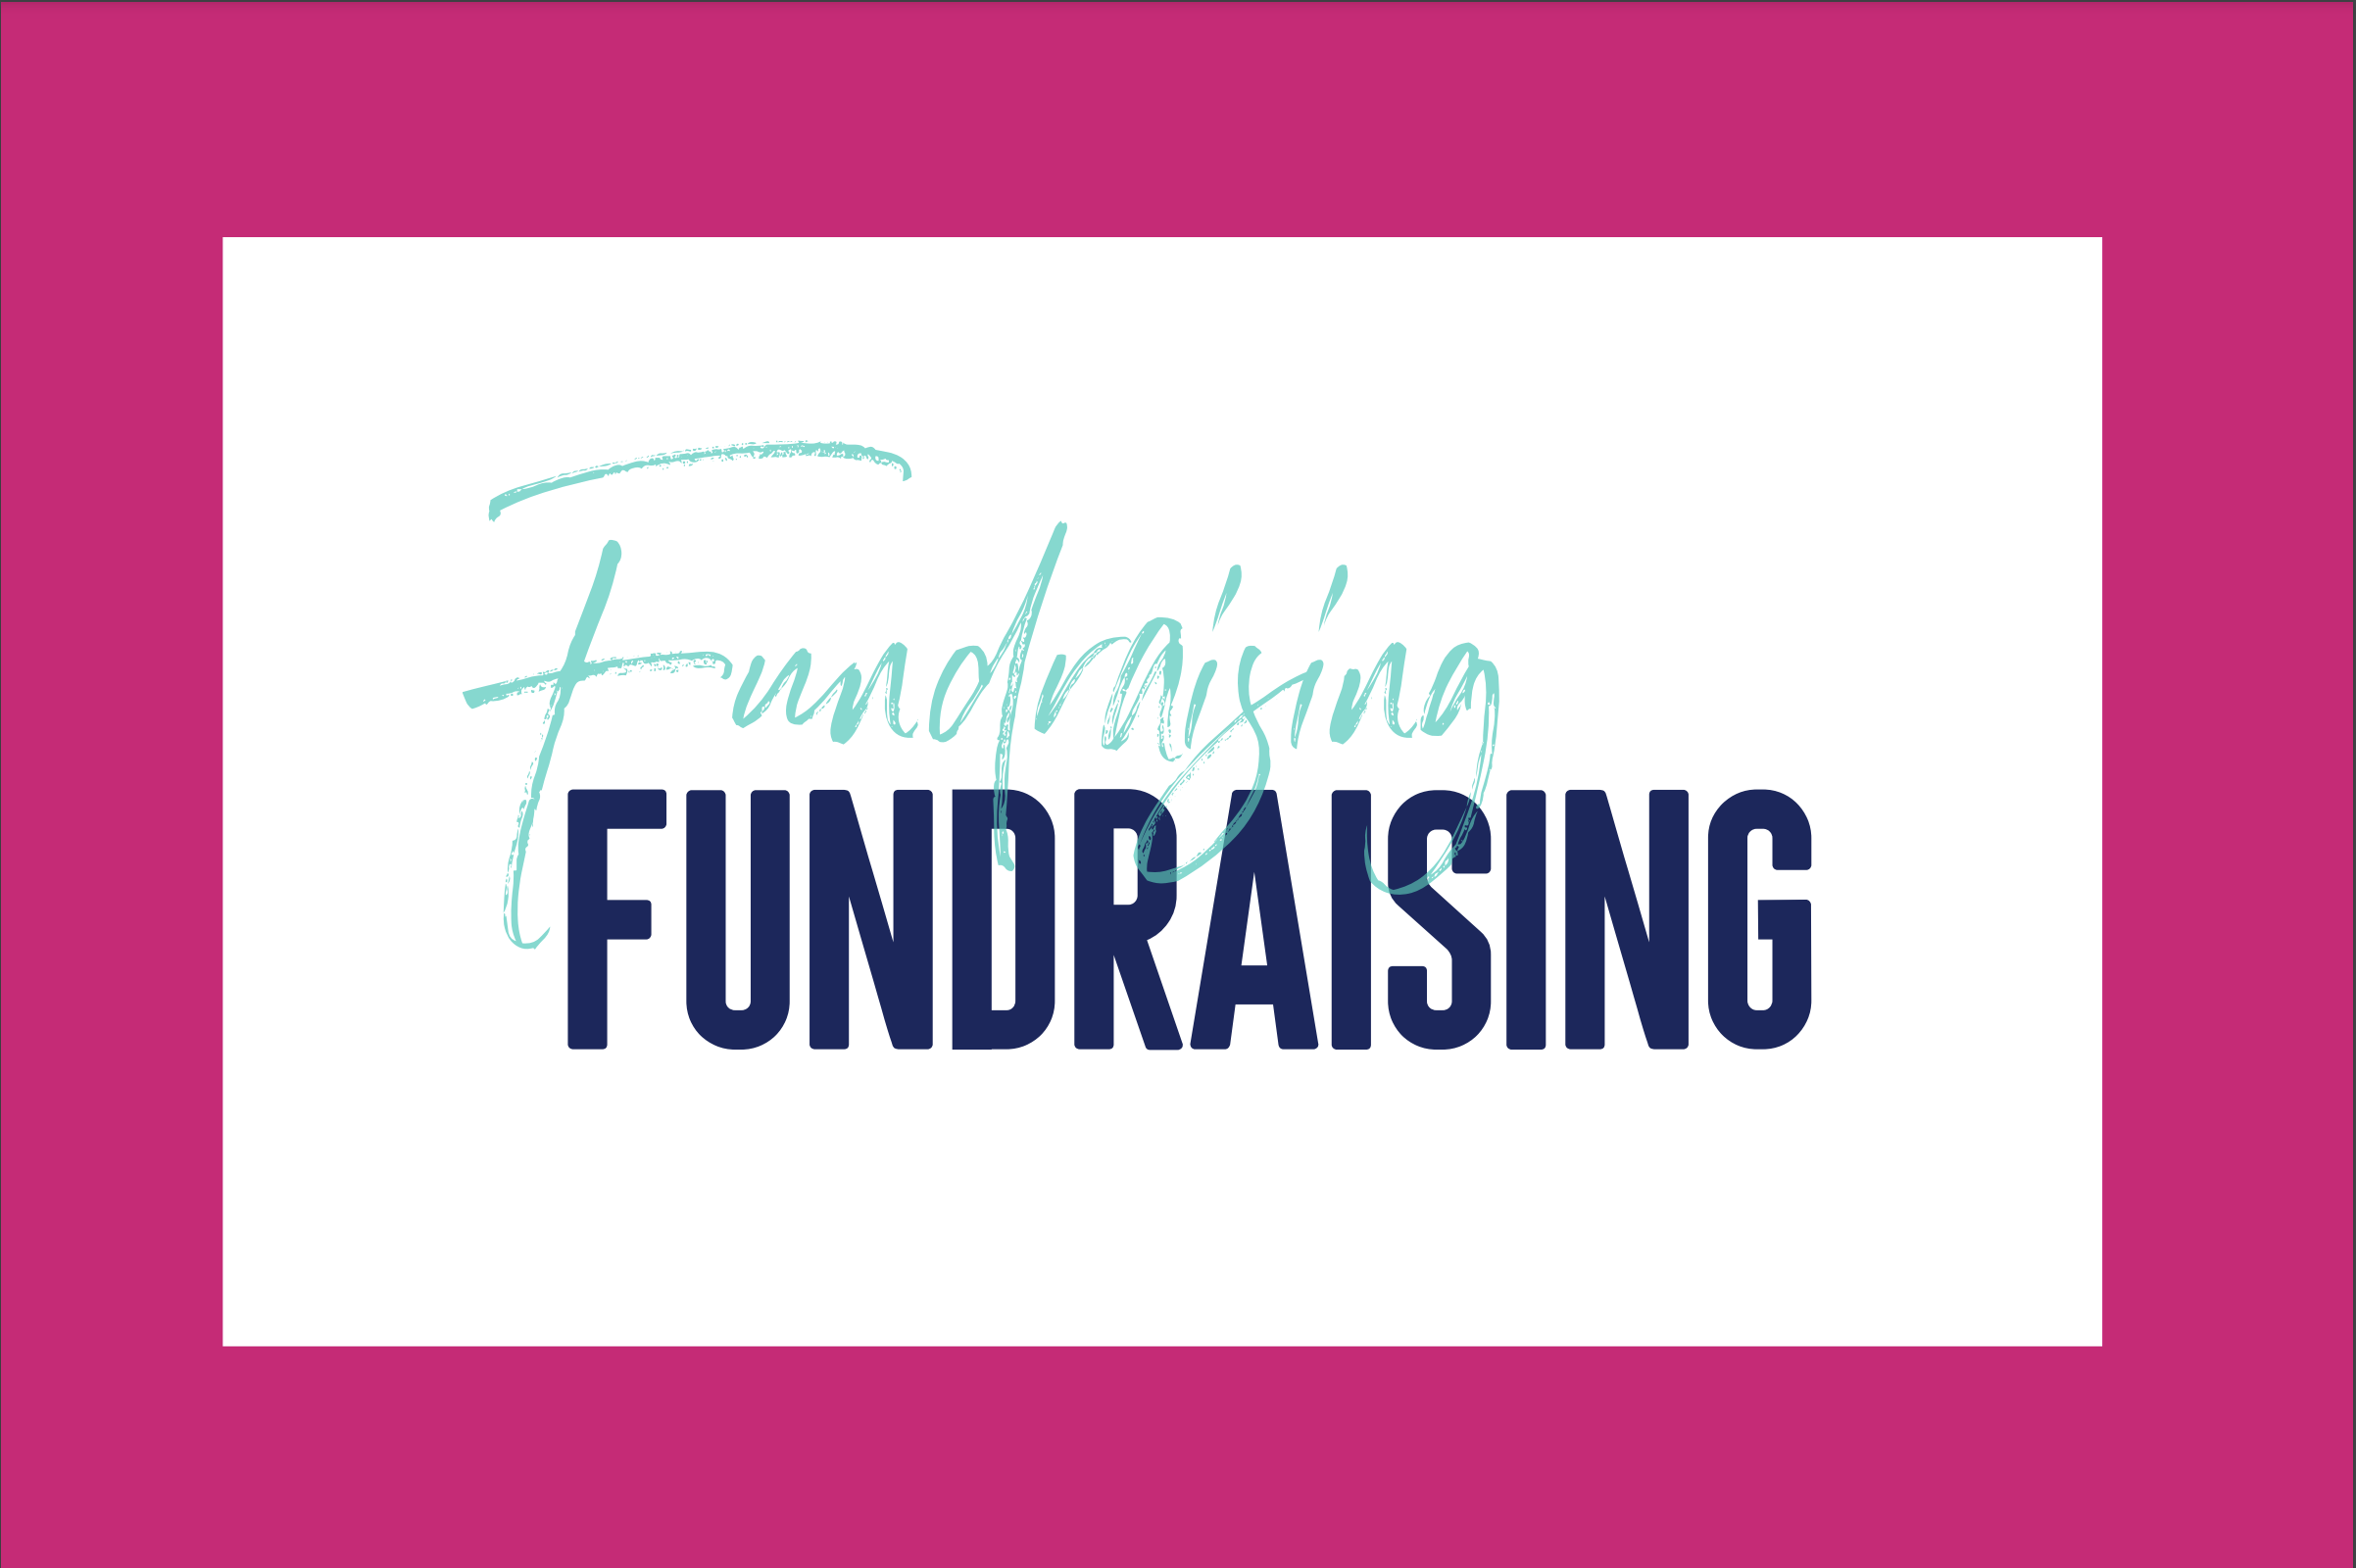 Fundraising